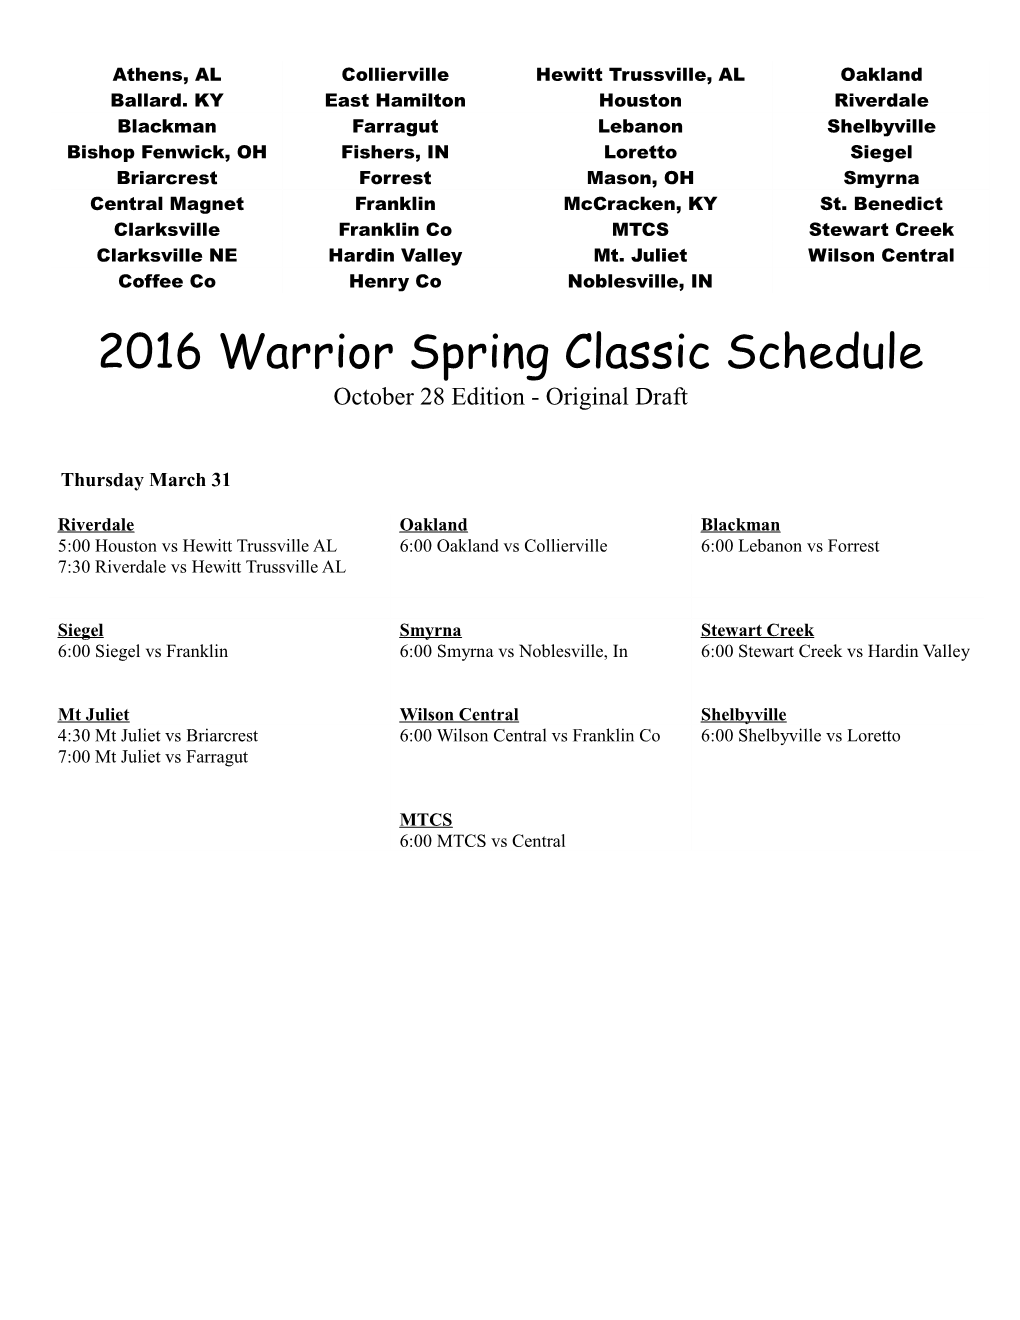 2013 Warrior Spring Classic Schedule